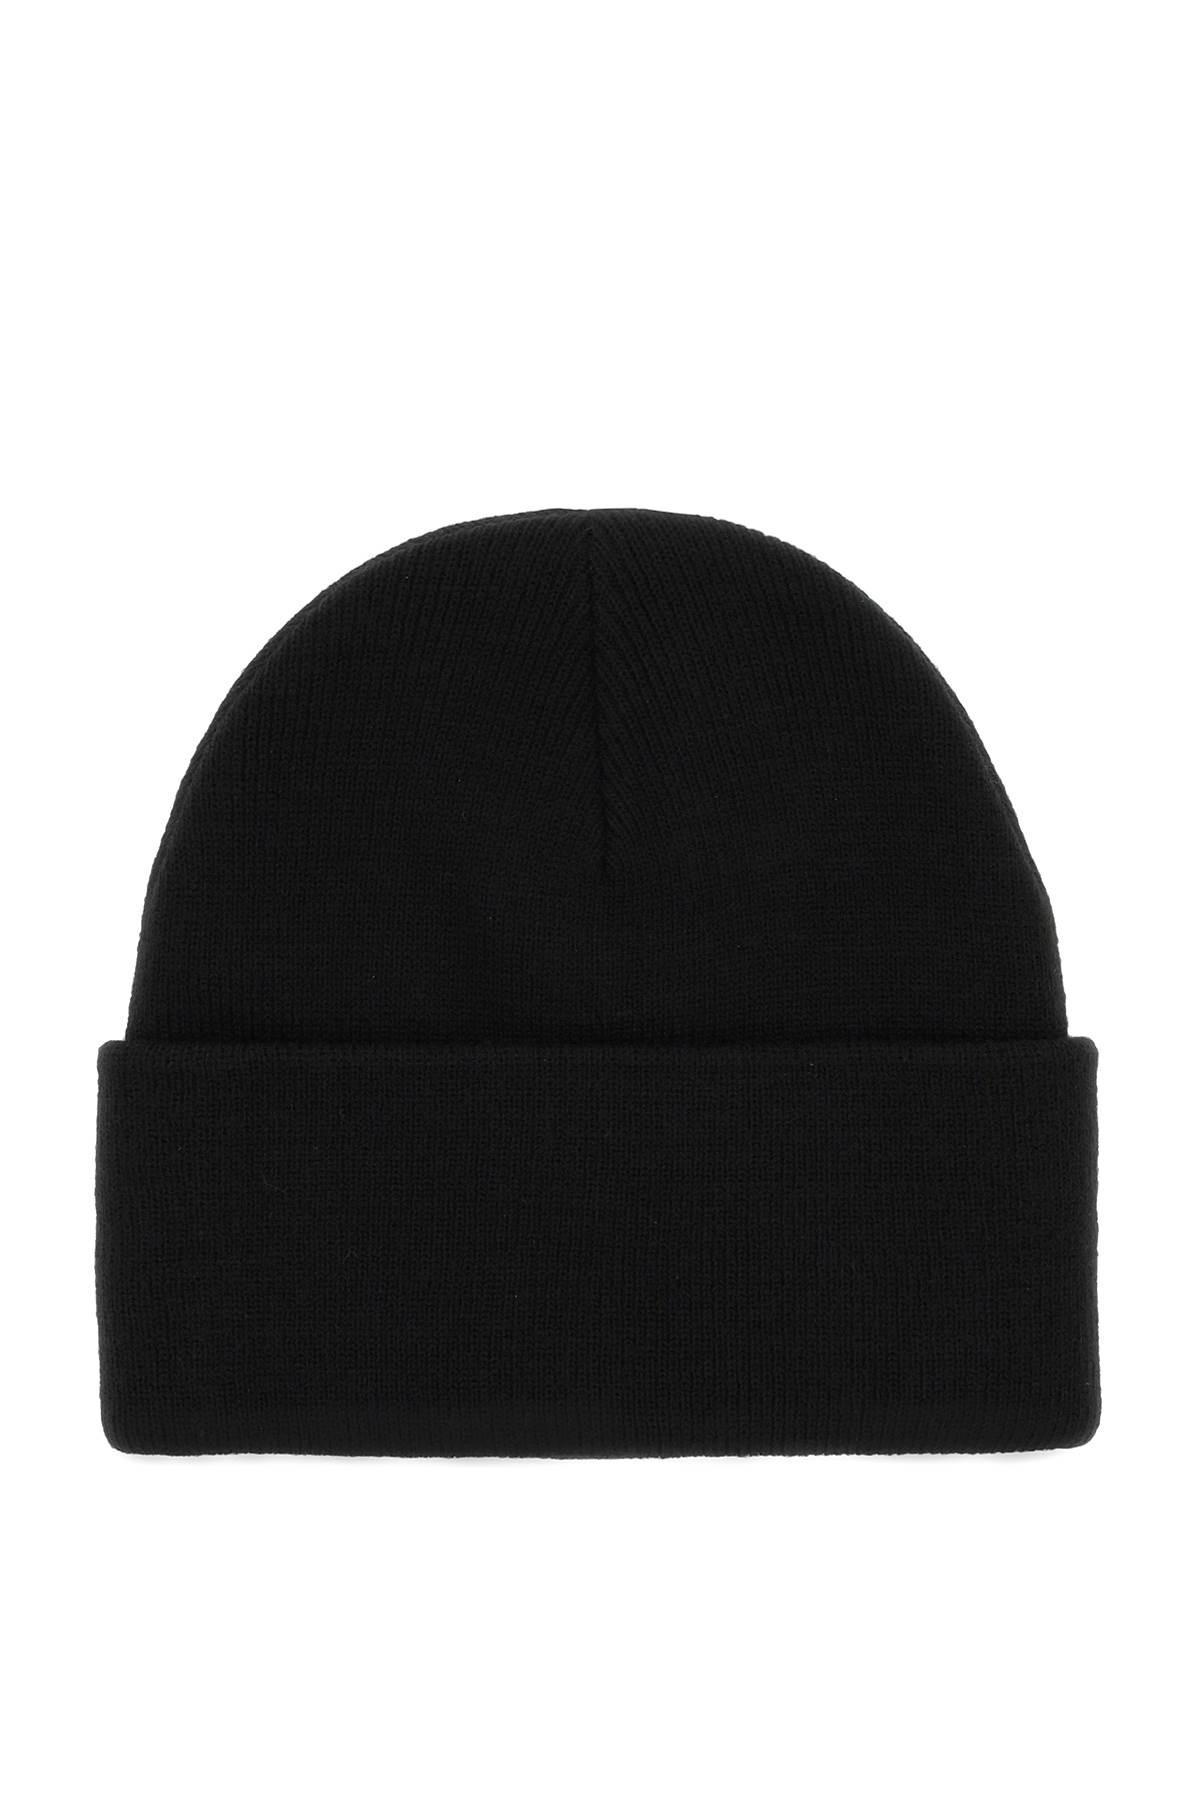 Carhartt WIP 'chase Beanie' Hat in Black for Men | Lyst